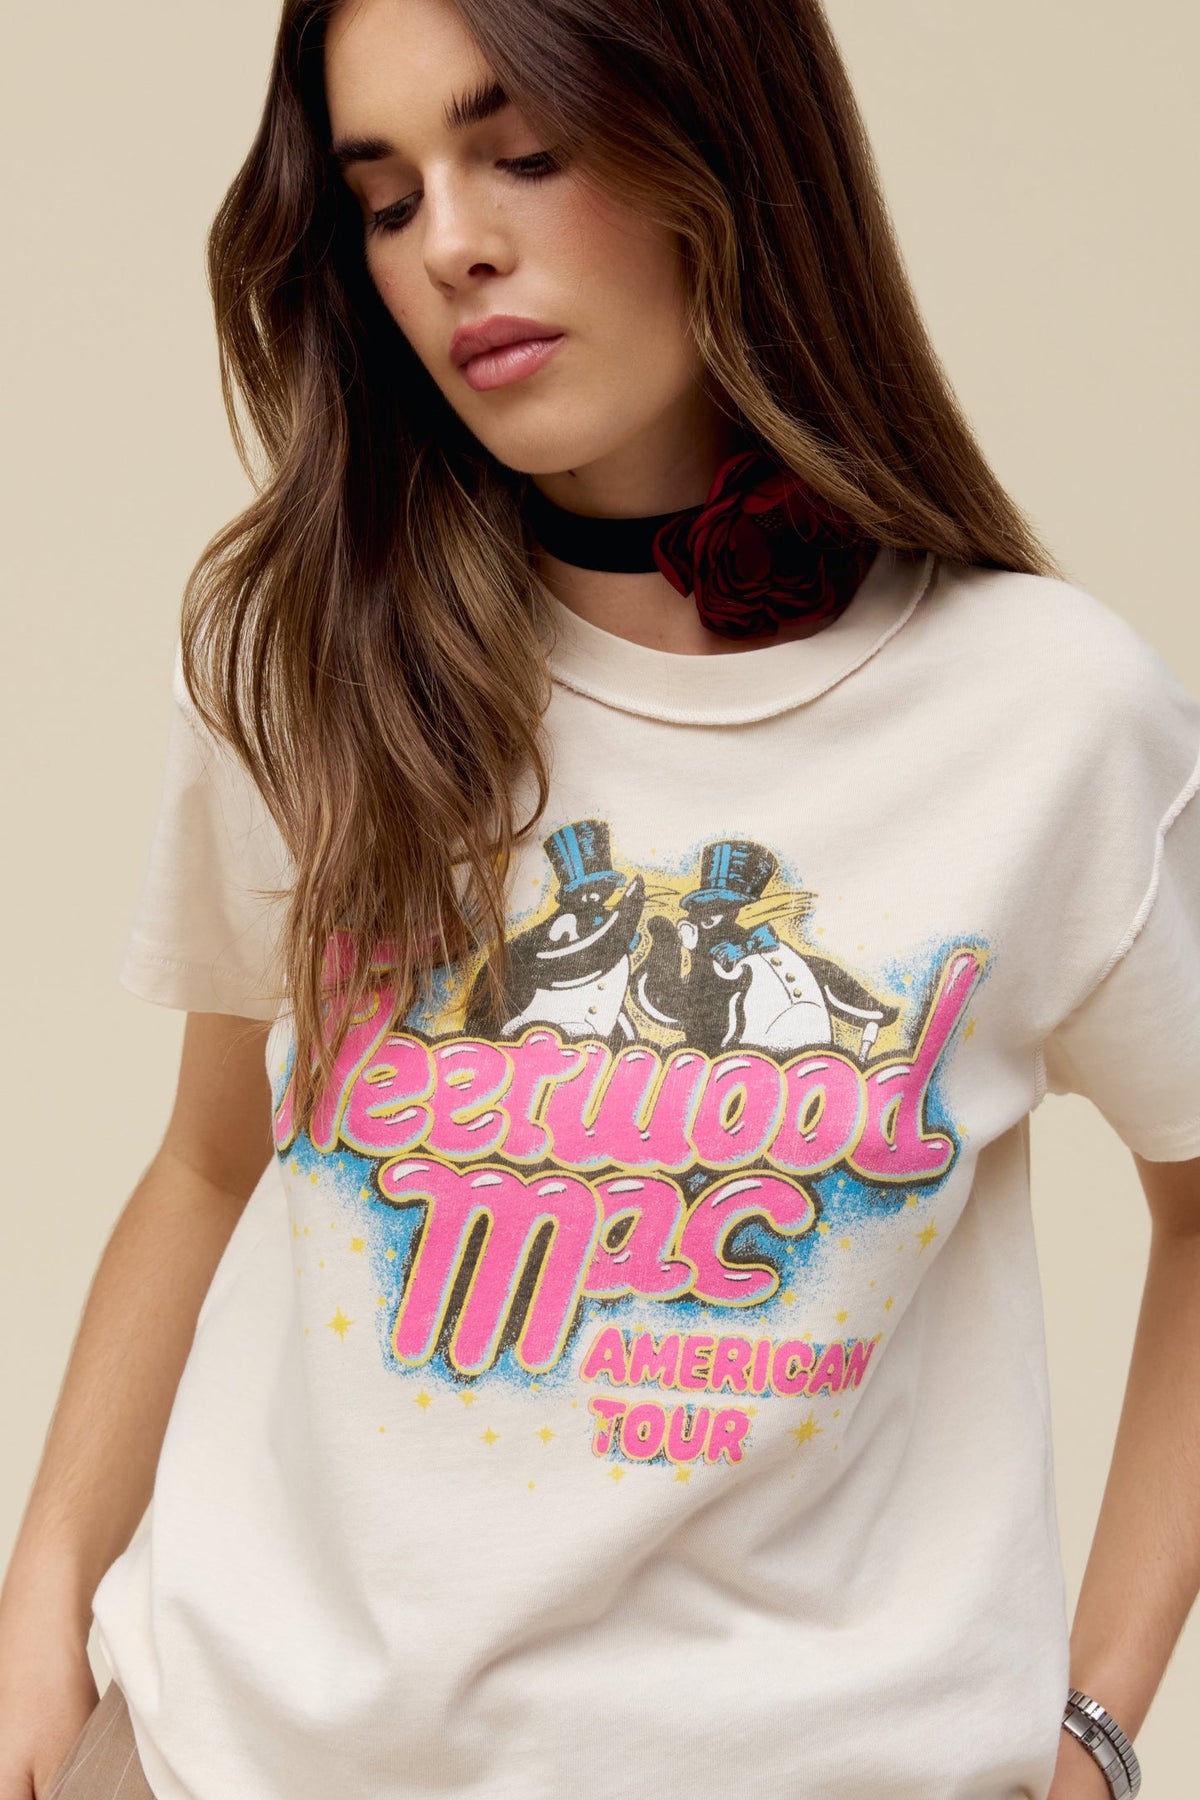 Fleetwood Mac American Reverse Tour Tee